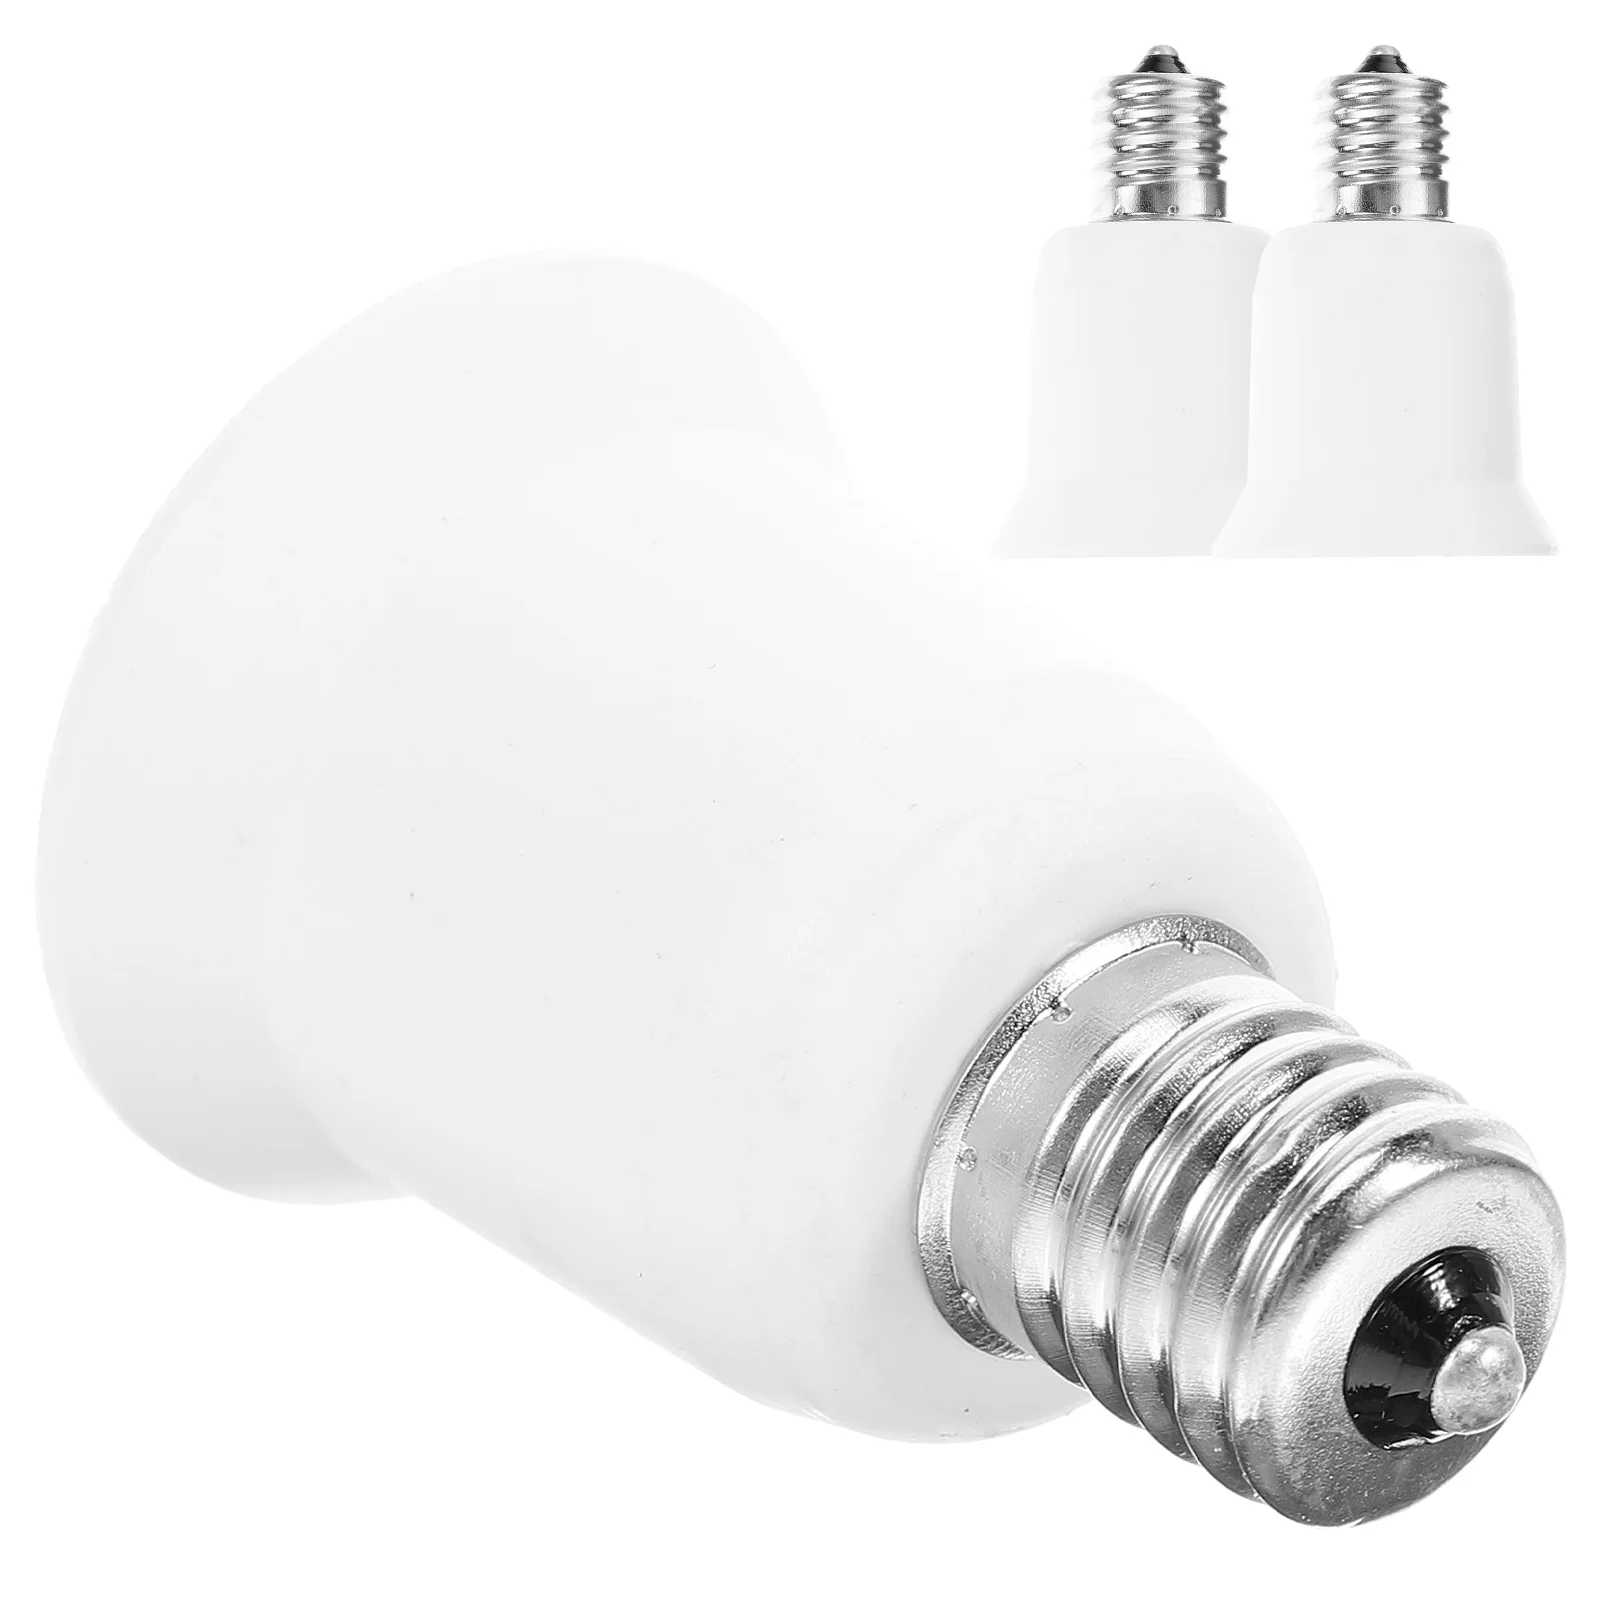 

3 Pcs Conversion Lamp Holder Light Bulb Converter Splitter Socket Adapter Changer E17 to E26 Pbt Replacement Kit